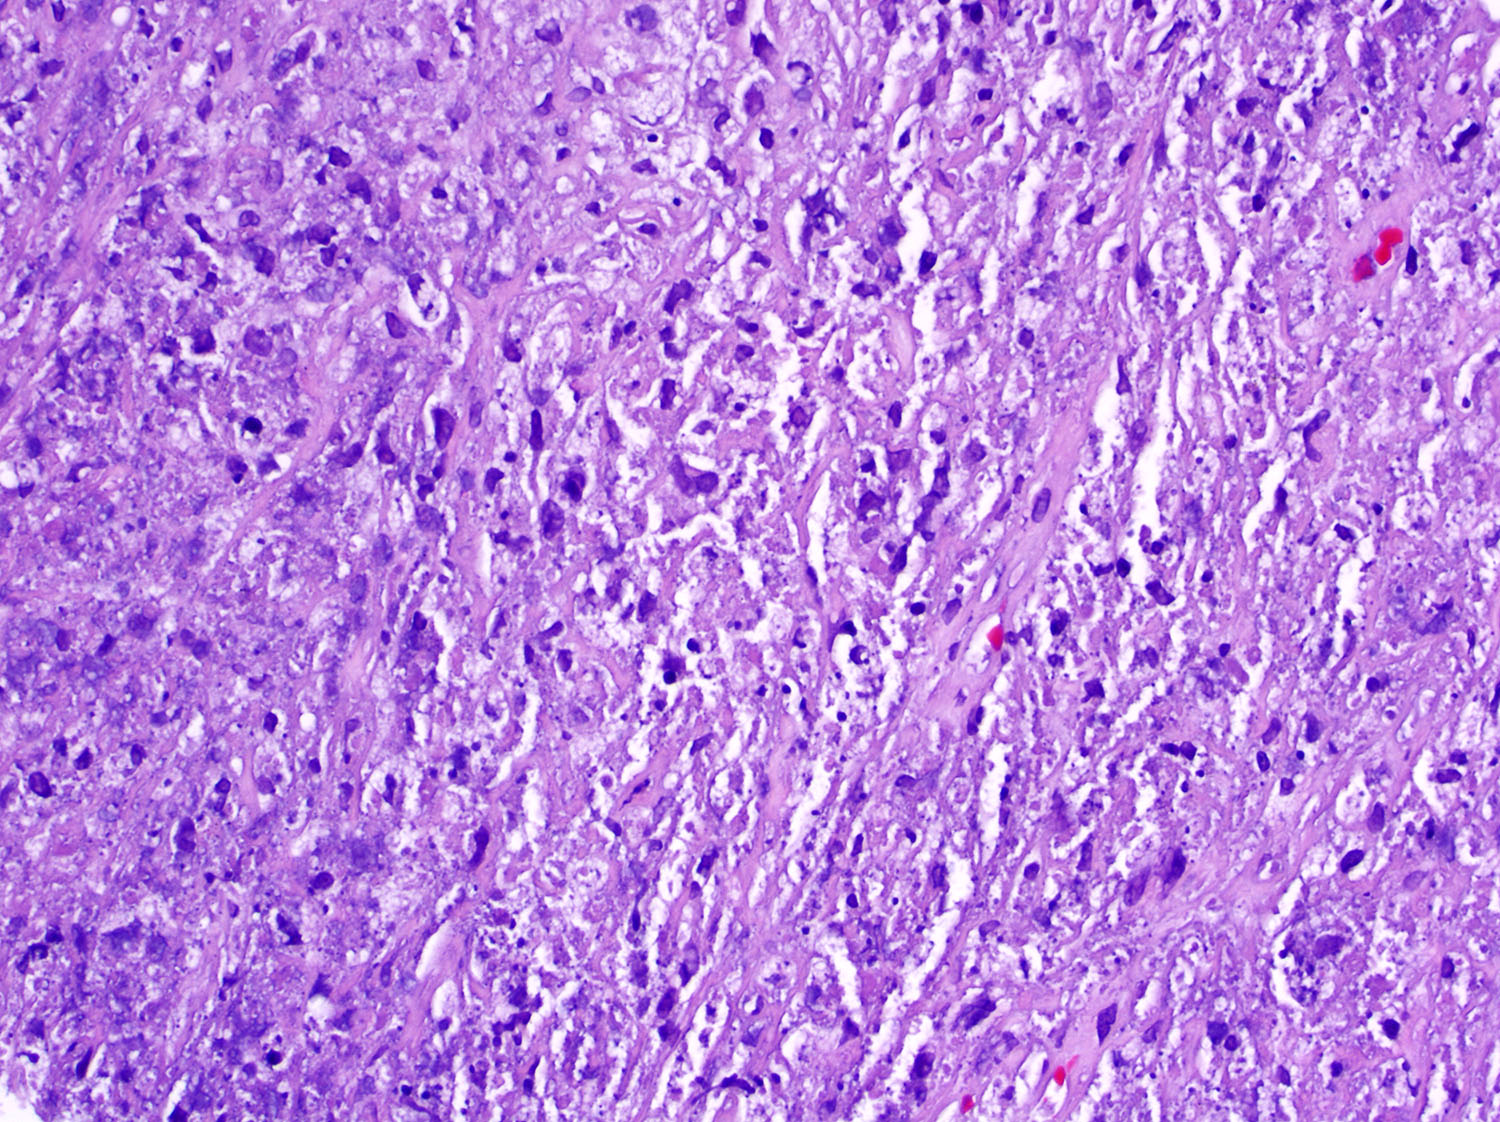 Necrosis in histoplasmosis